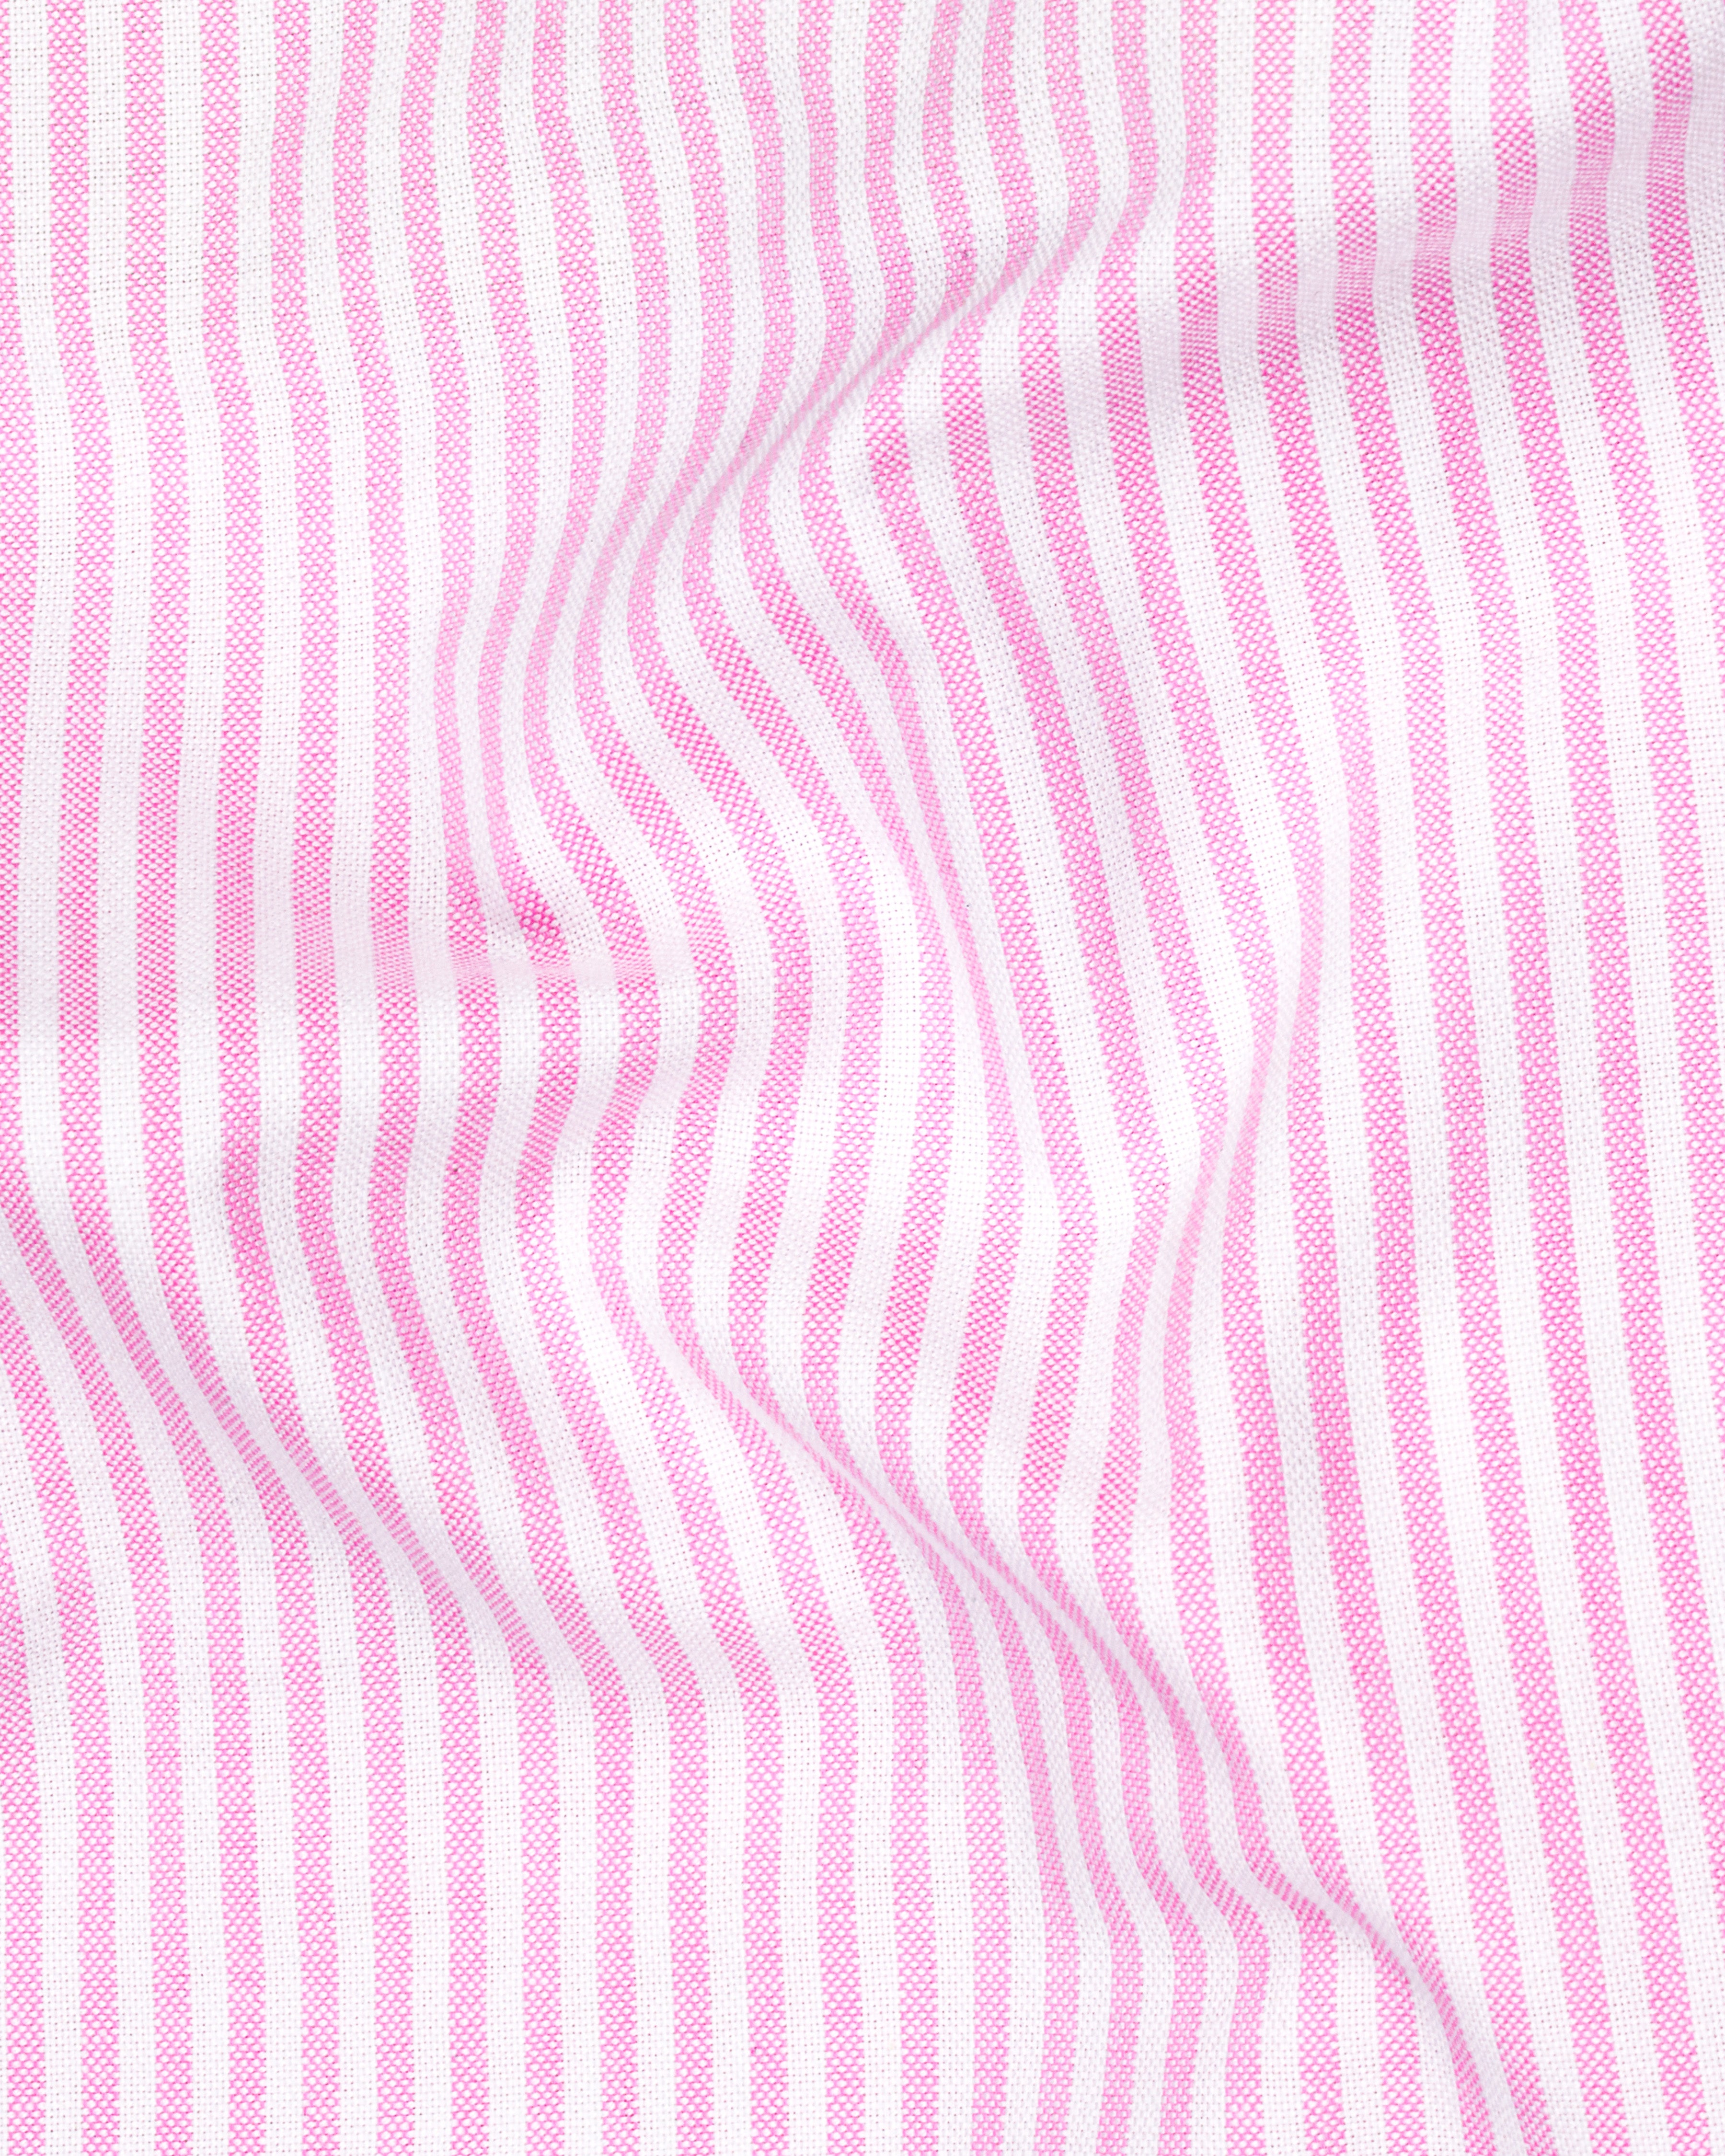 Cherub Pink with White Striped Oxford Lounge Pants LP193-28, LP193-30, LP193-32, LP193-34, LP193-36, LP193-38, LP193-40, LP193-42, LP193-44